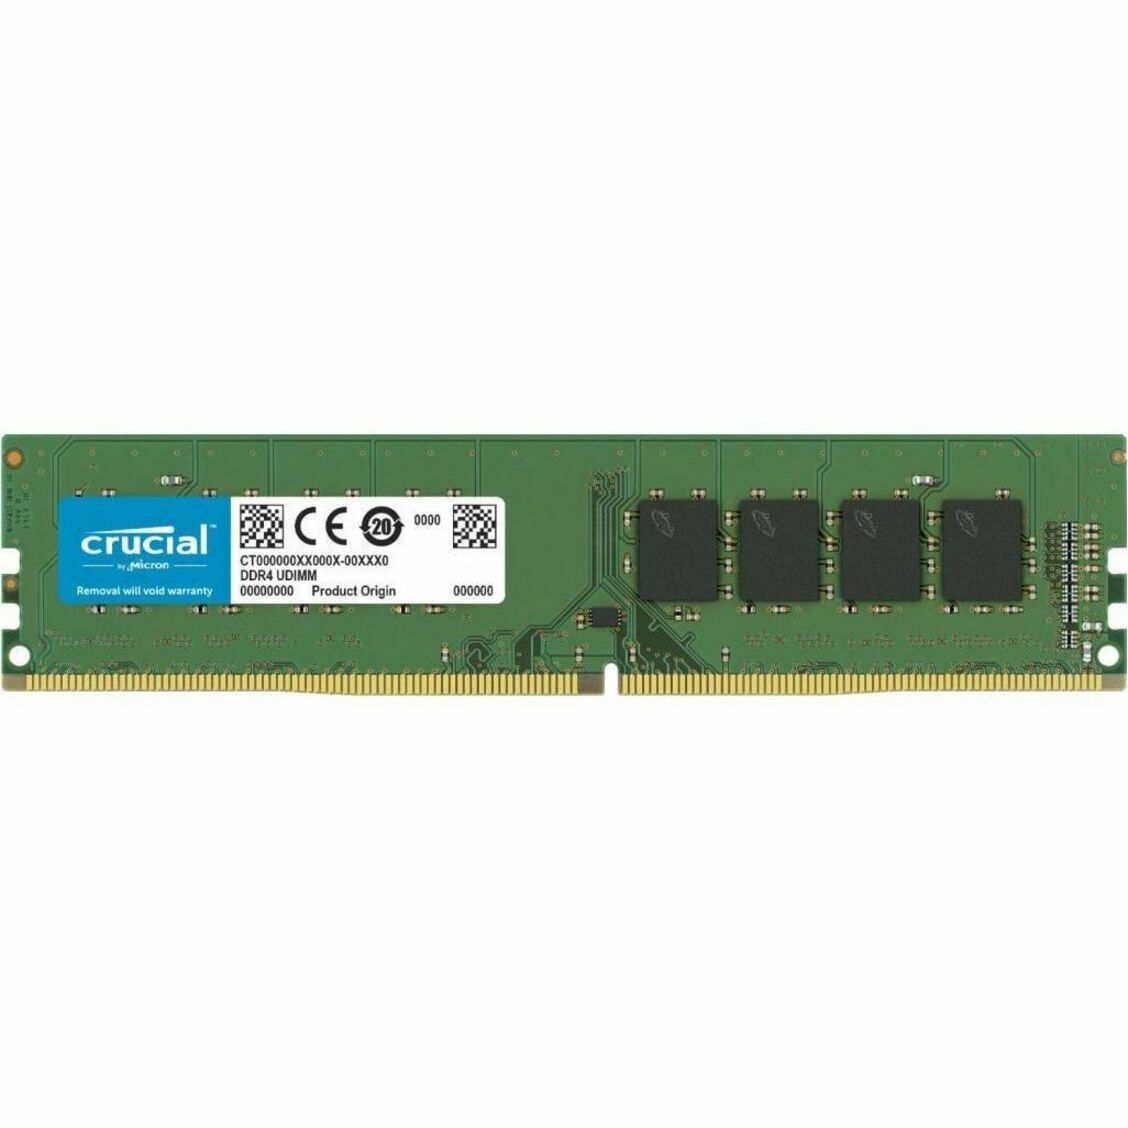 CRUCIAL/MICRON - IMSOURCING 8GB DDR4 SDRAM Memory Module (CT8G4DFS824A)